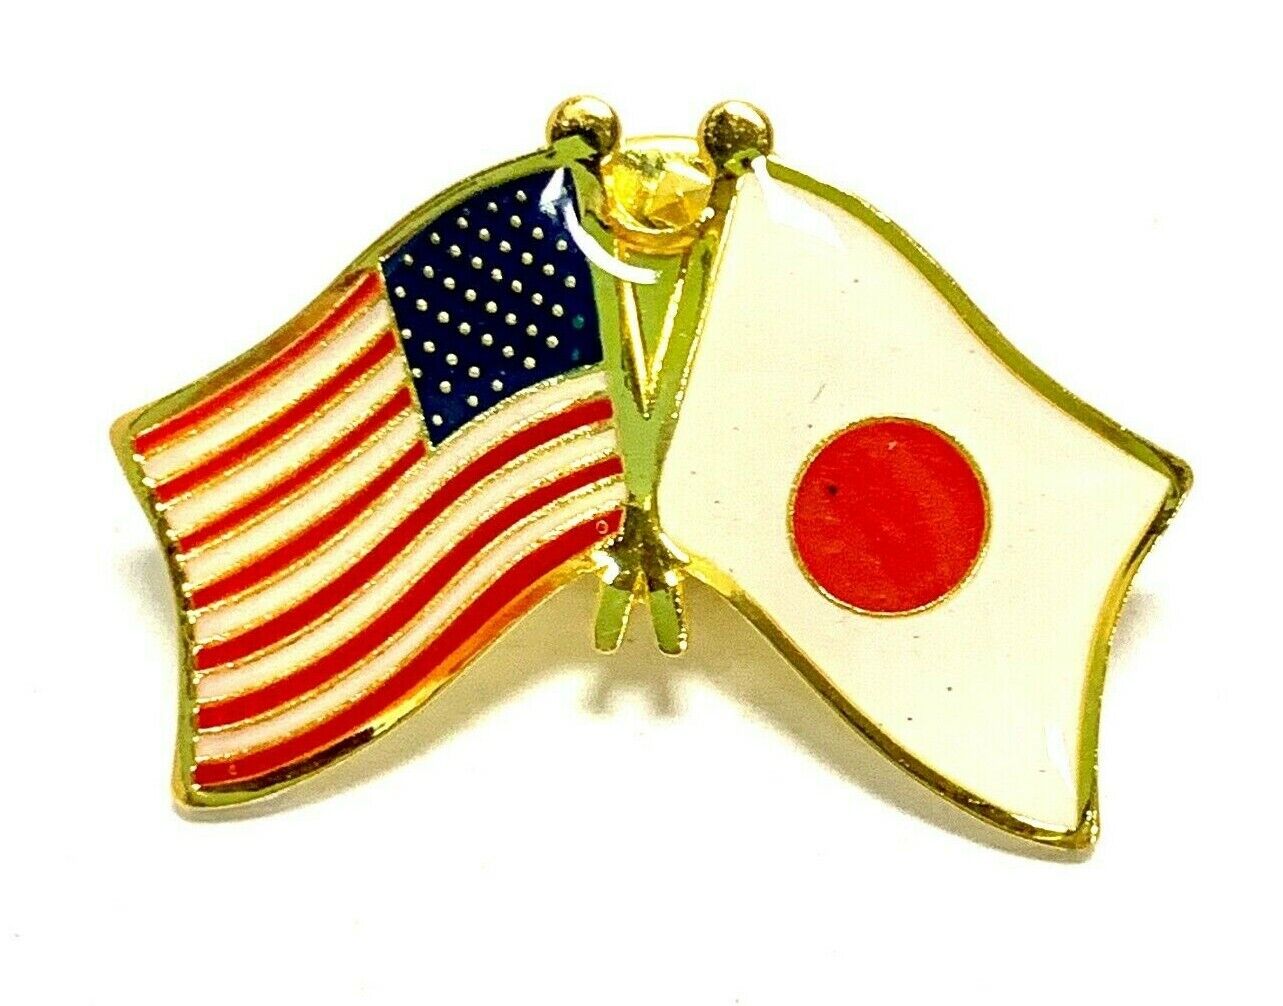 USA Japan Friendship Flag Pin, Double Flag Lapel Pin